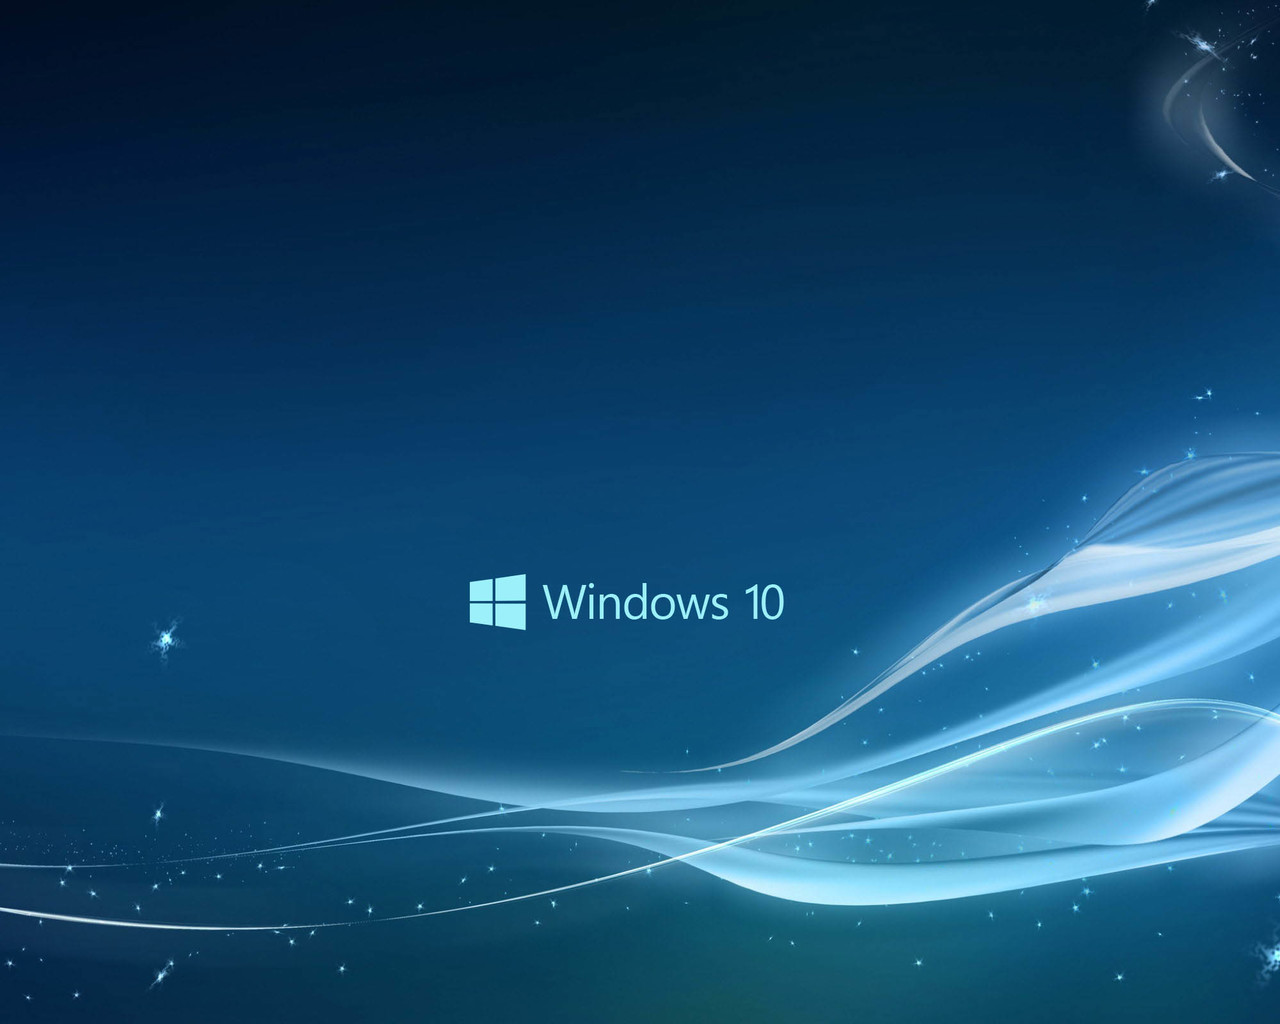 Free download Creative Windows 10 wallpaper HD blue image ...